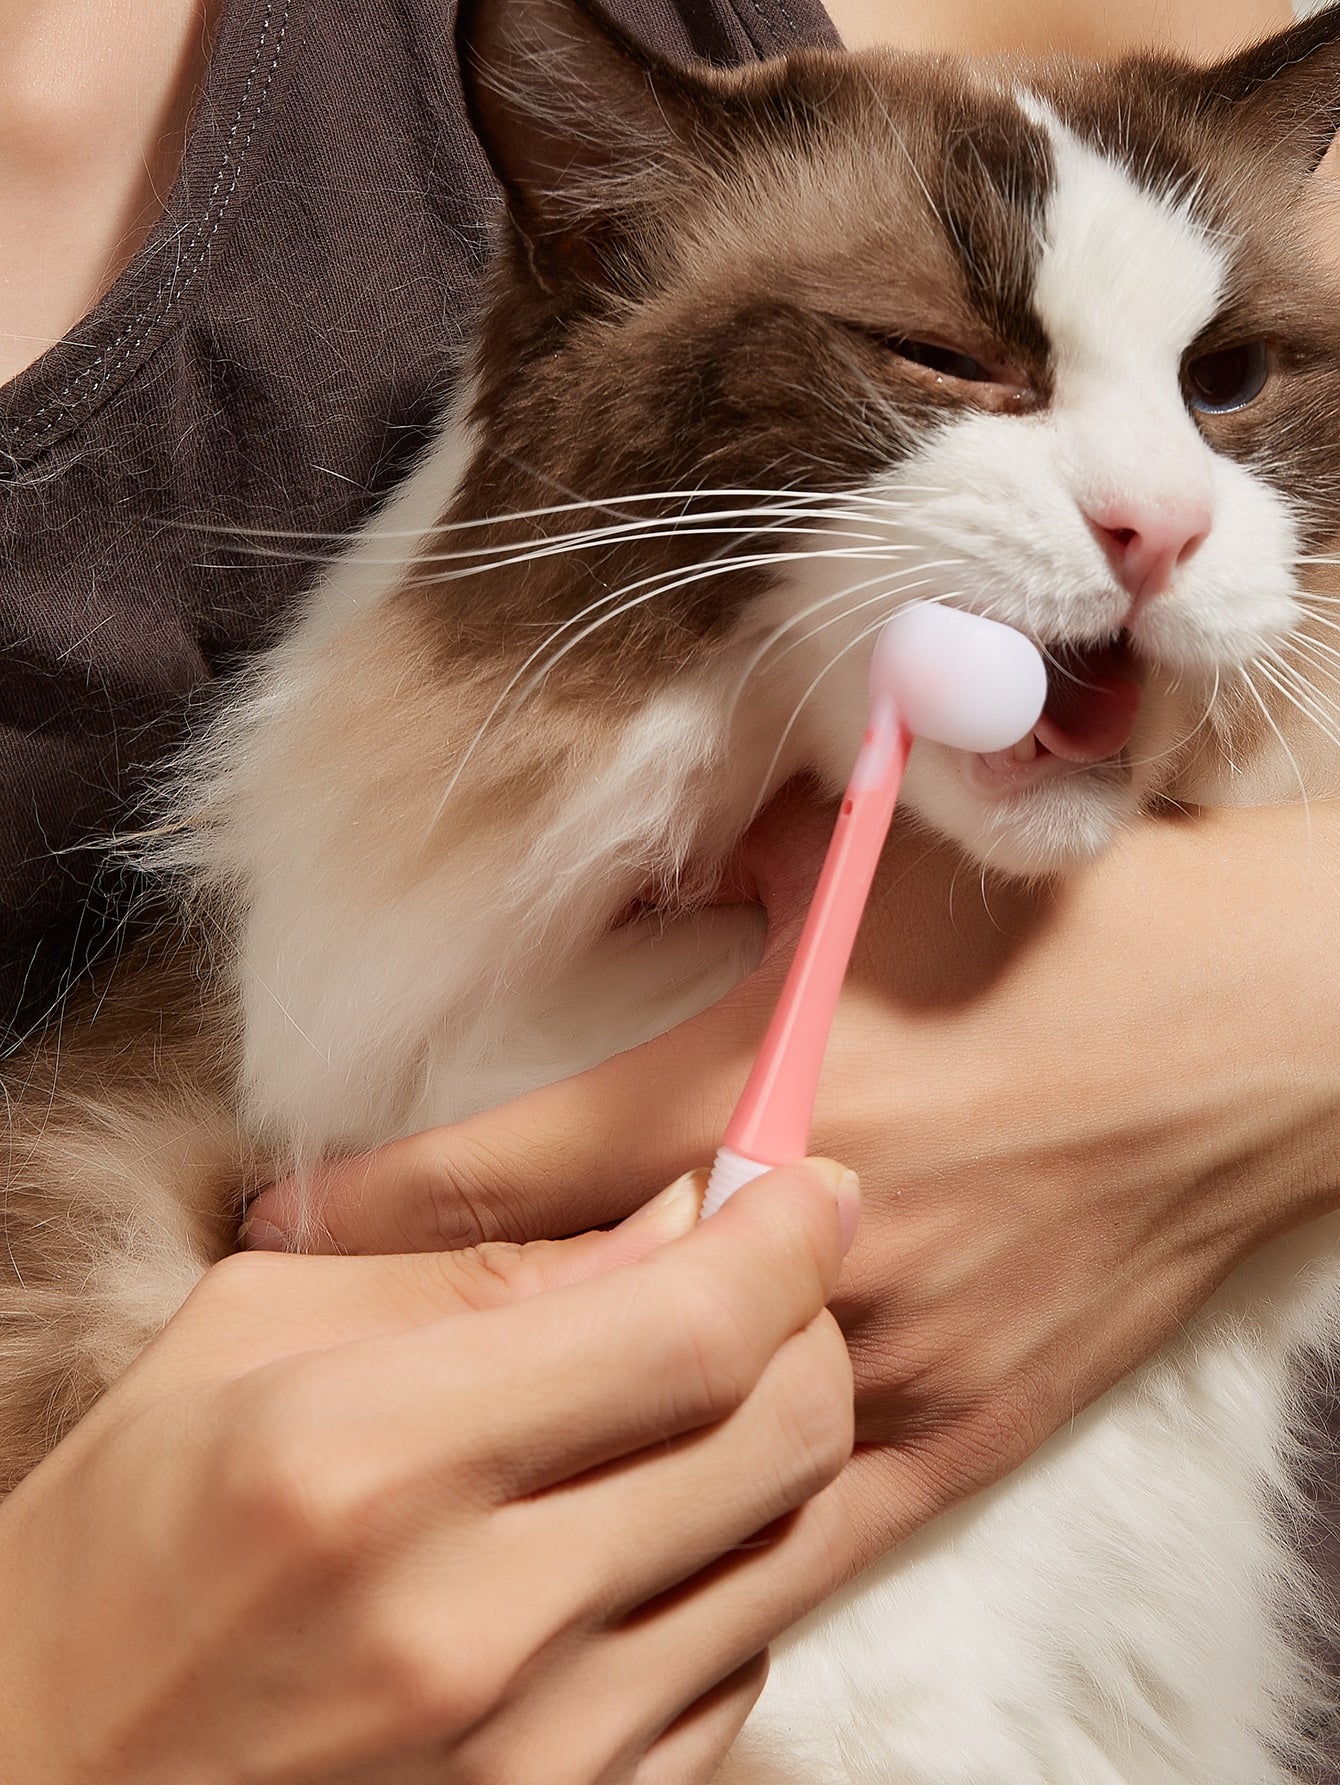 Silicone Pet Toothbrush